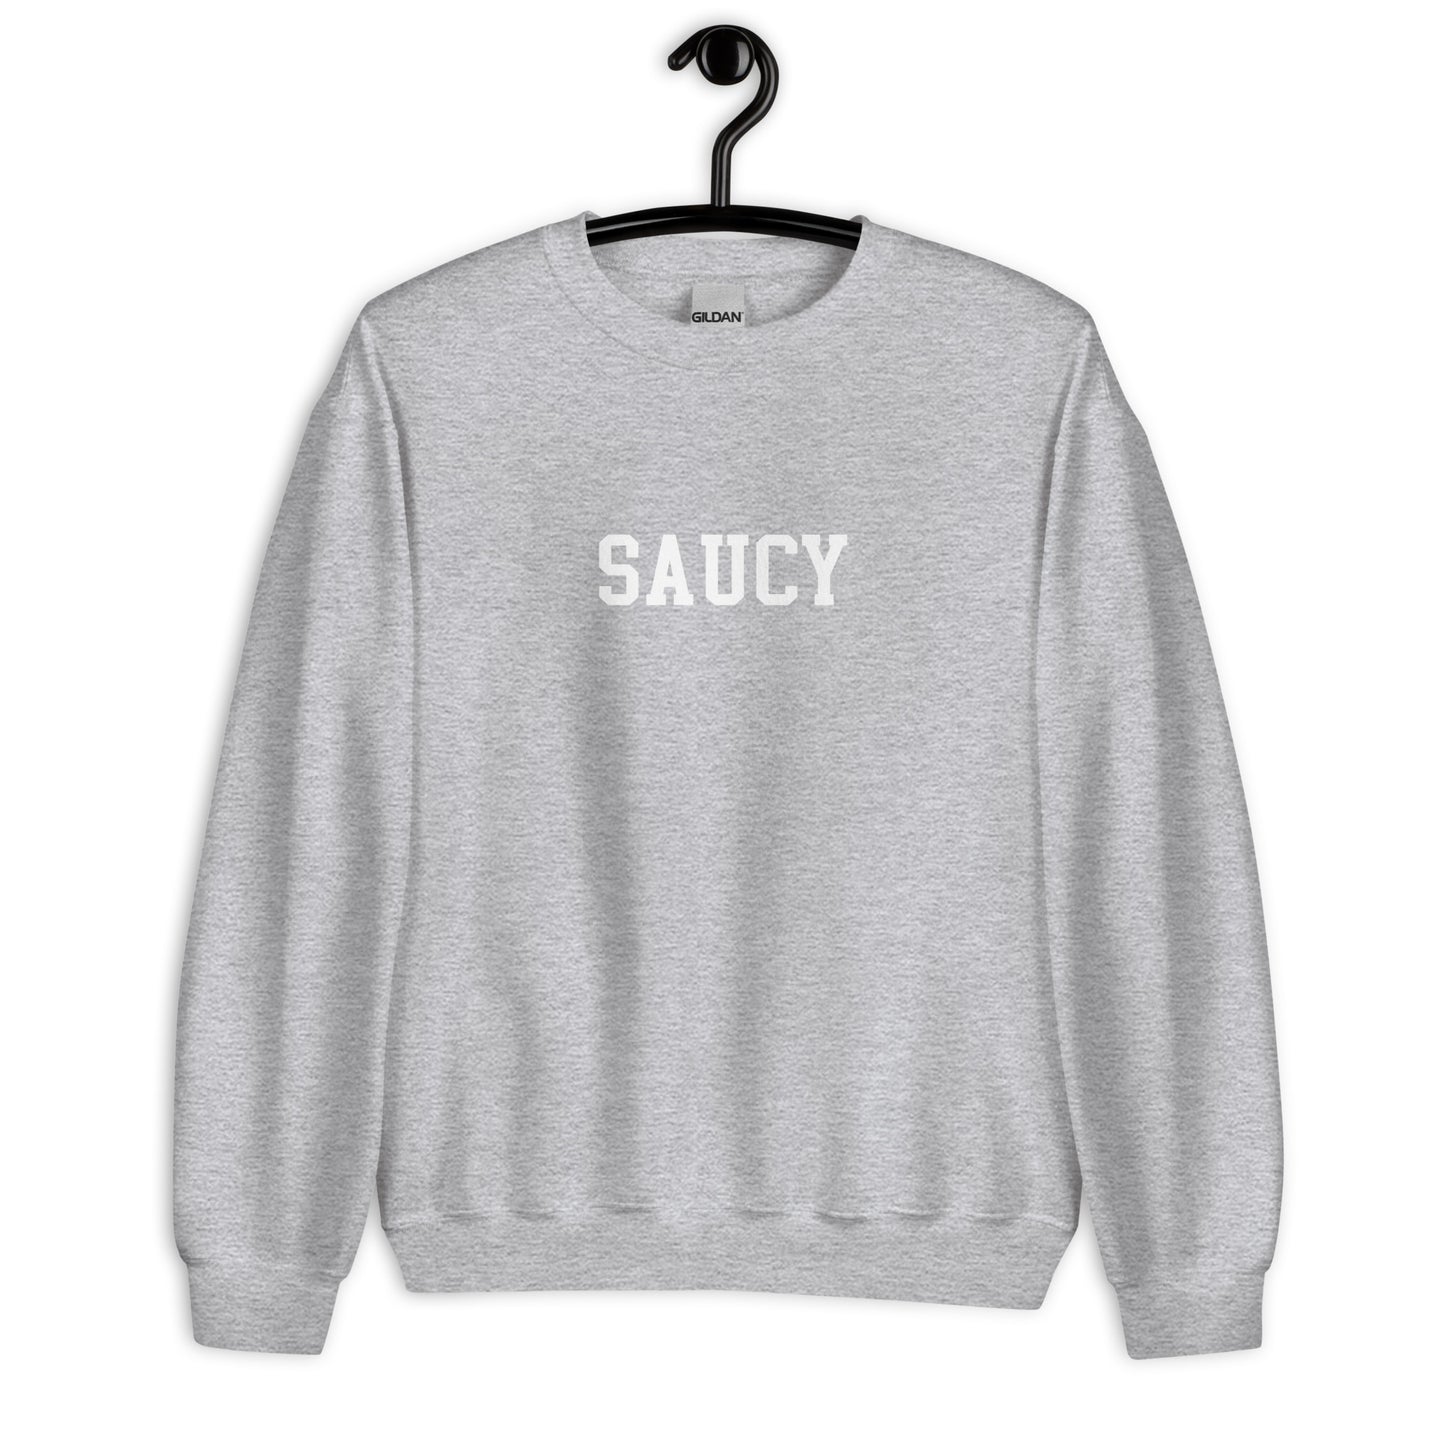 Saucy Sweatshirt - Straight Font